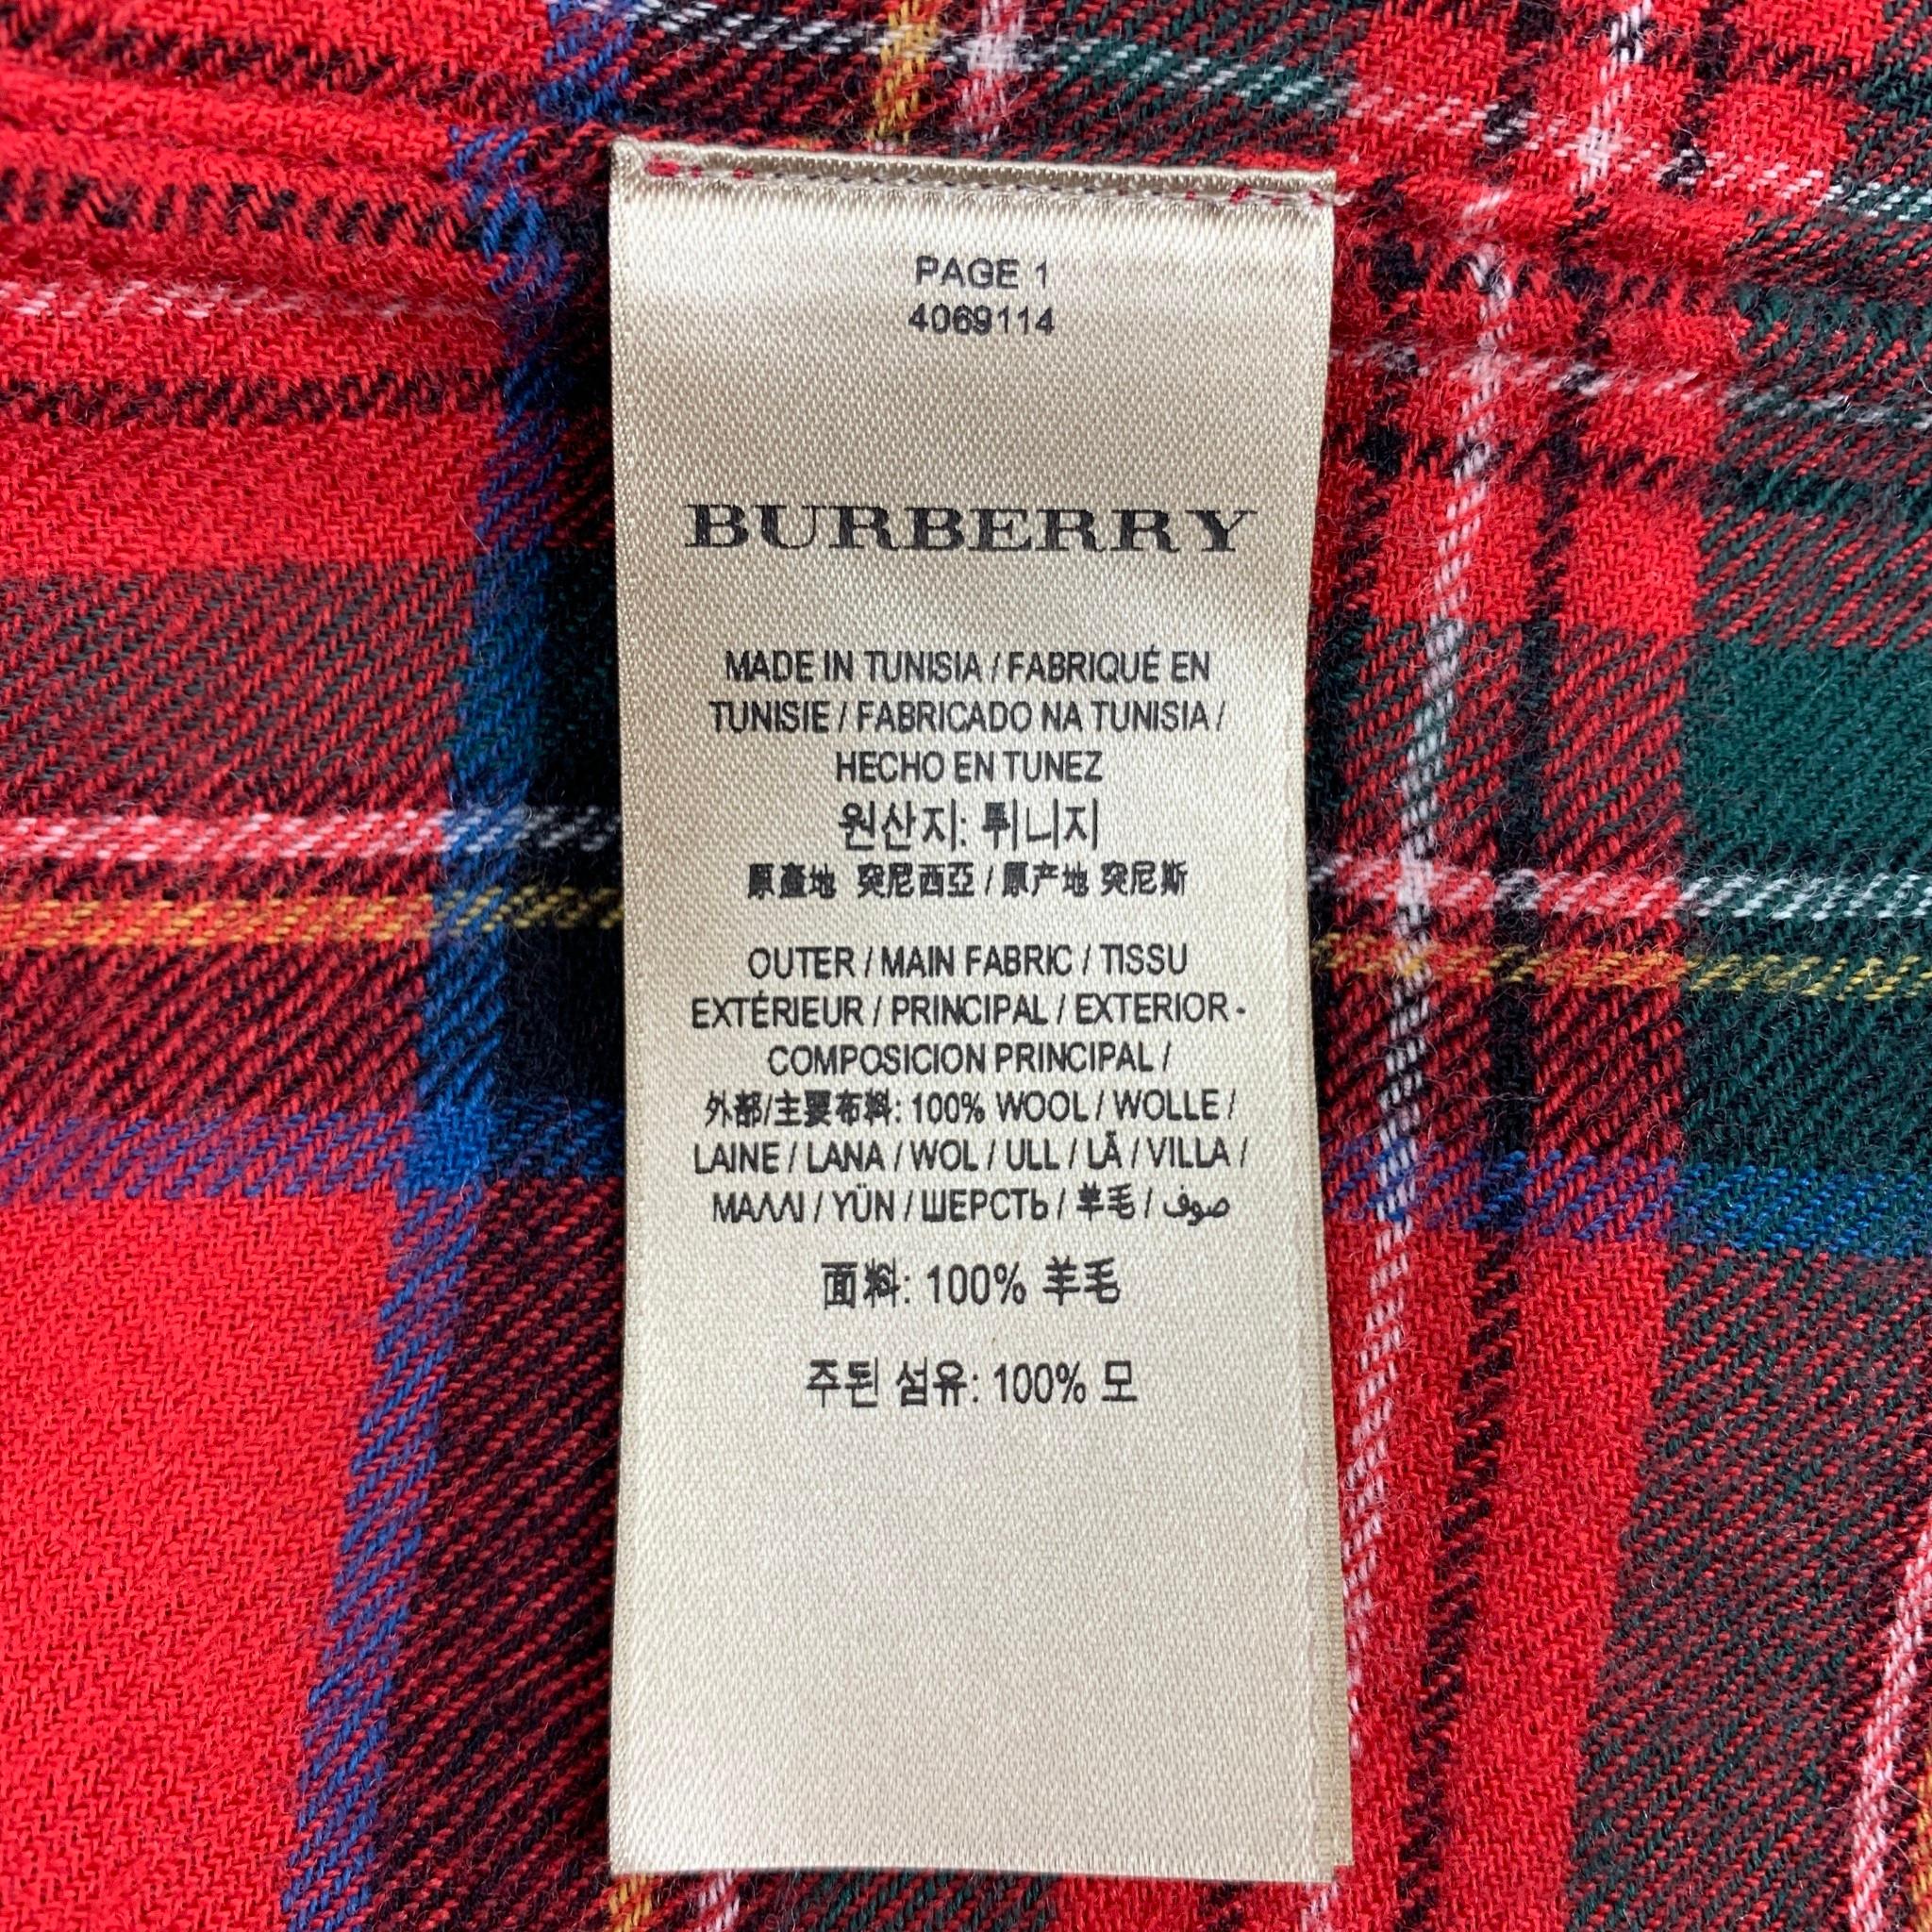 red burberry shirt